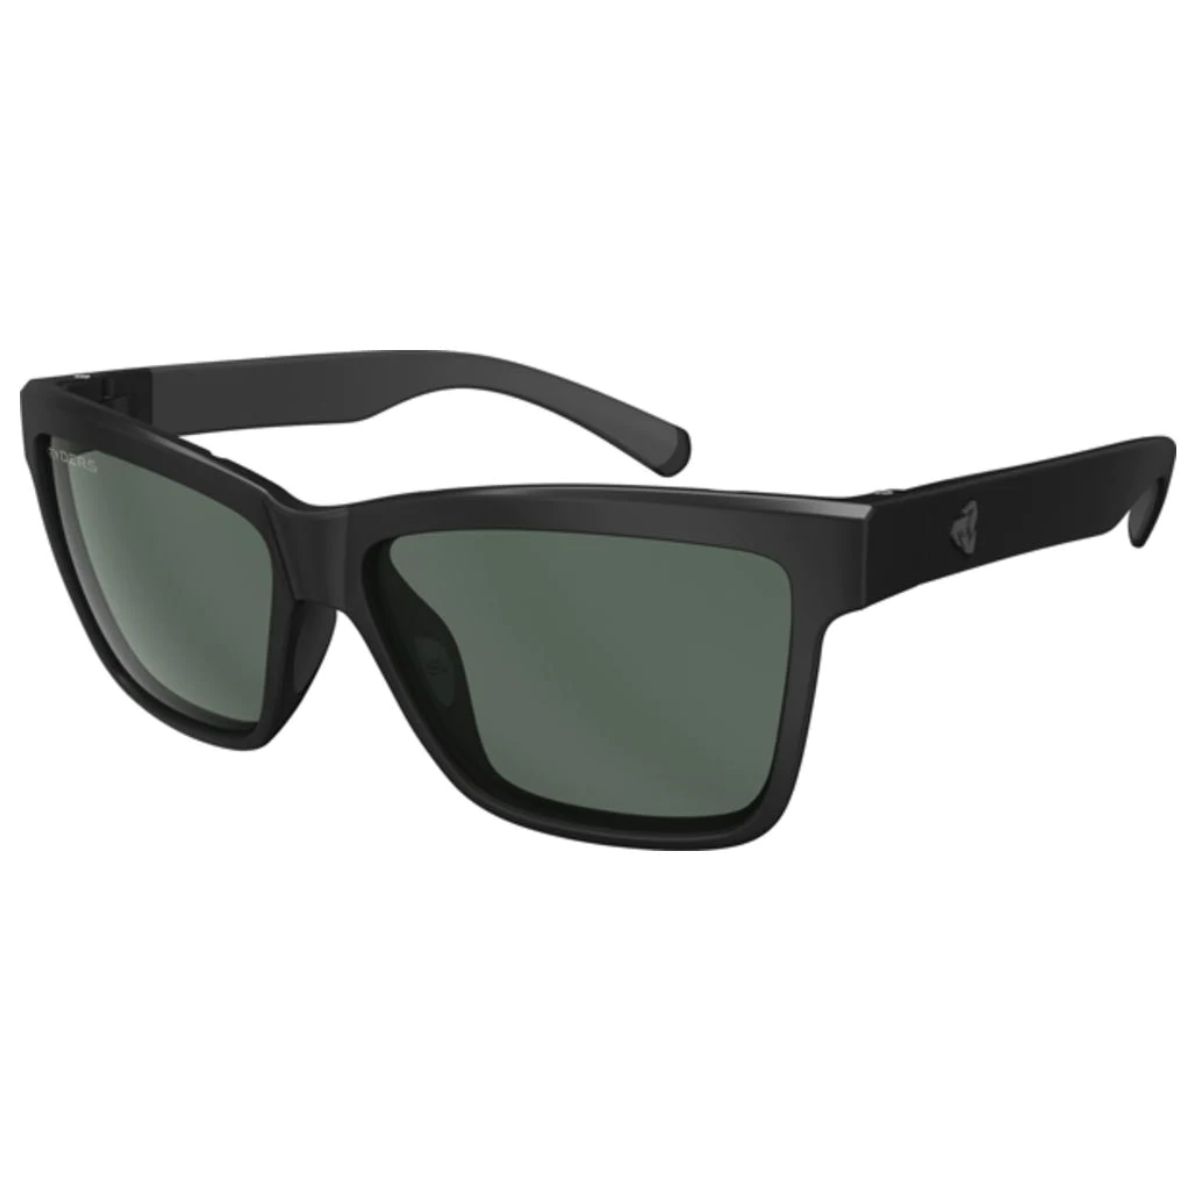 Ryders Norvan Sunglasses Matte Black - Green Lenses 